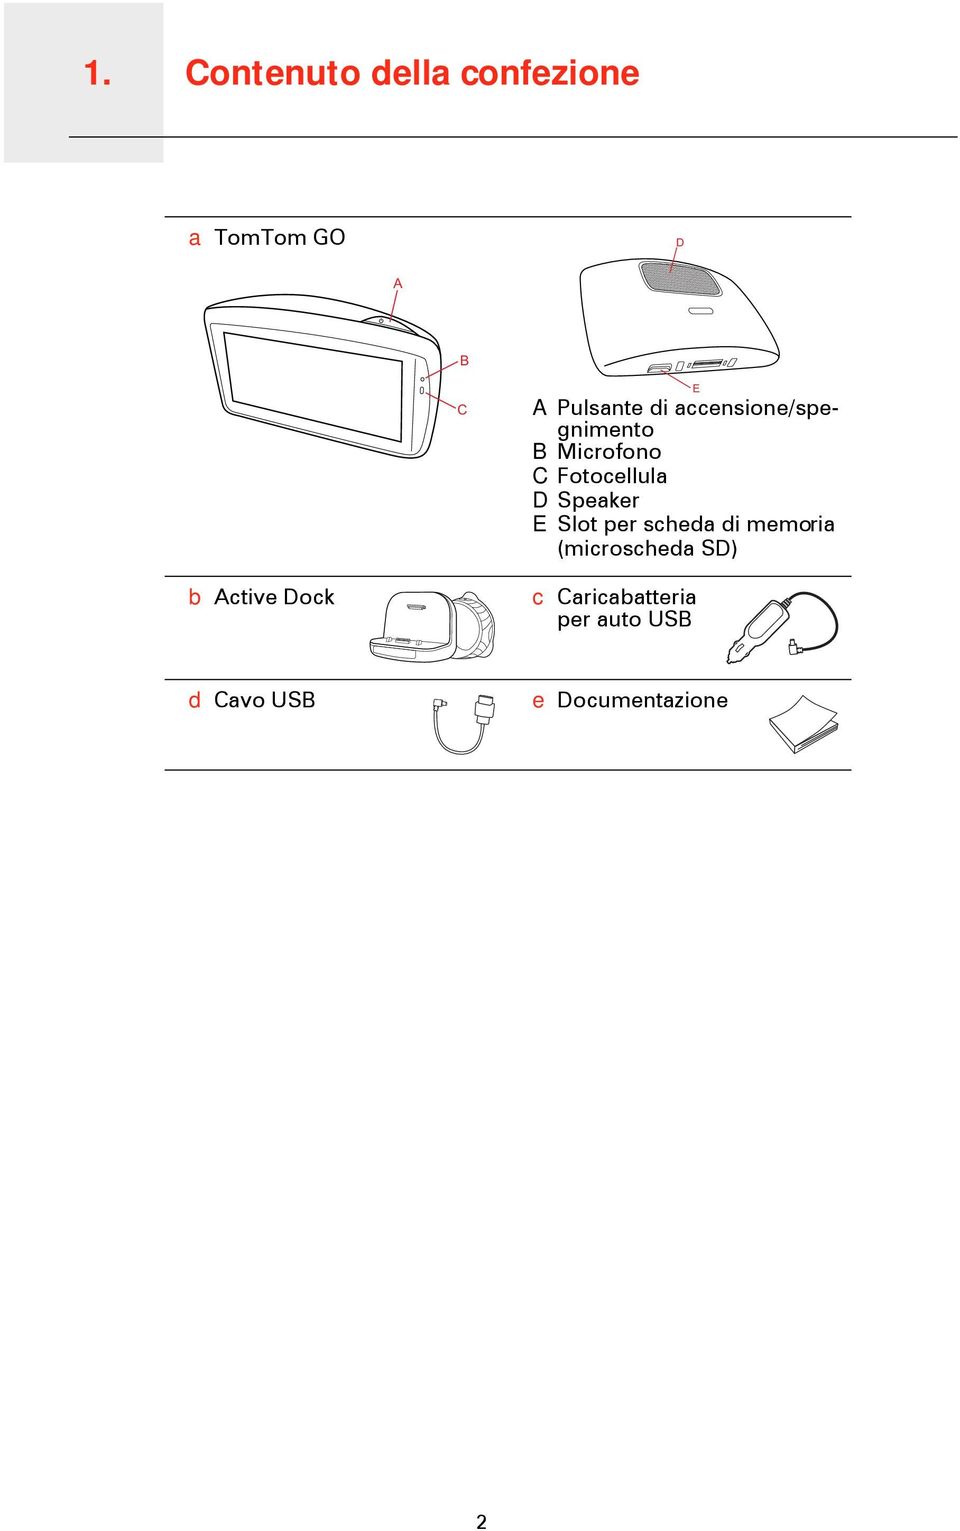 Fotocellula D Speaker E Slot per scheda di memoria (microscheda SD)